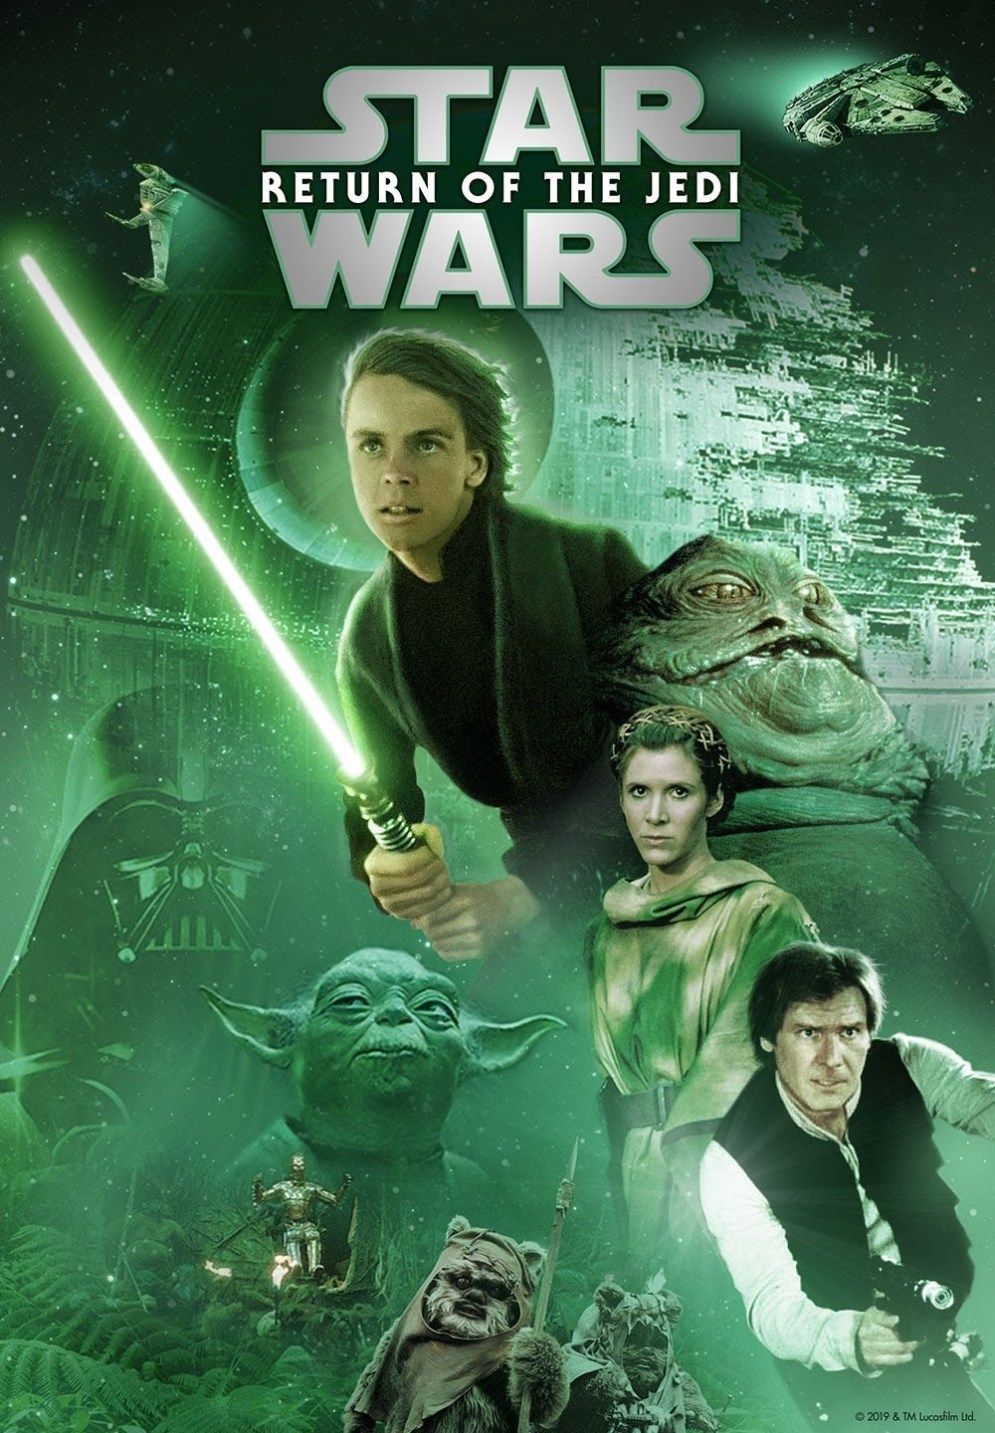 High resolution Disney+ Star Wars posters. Star wars image